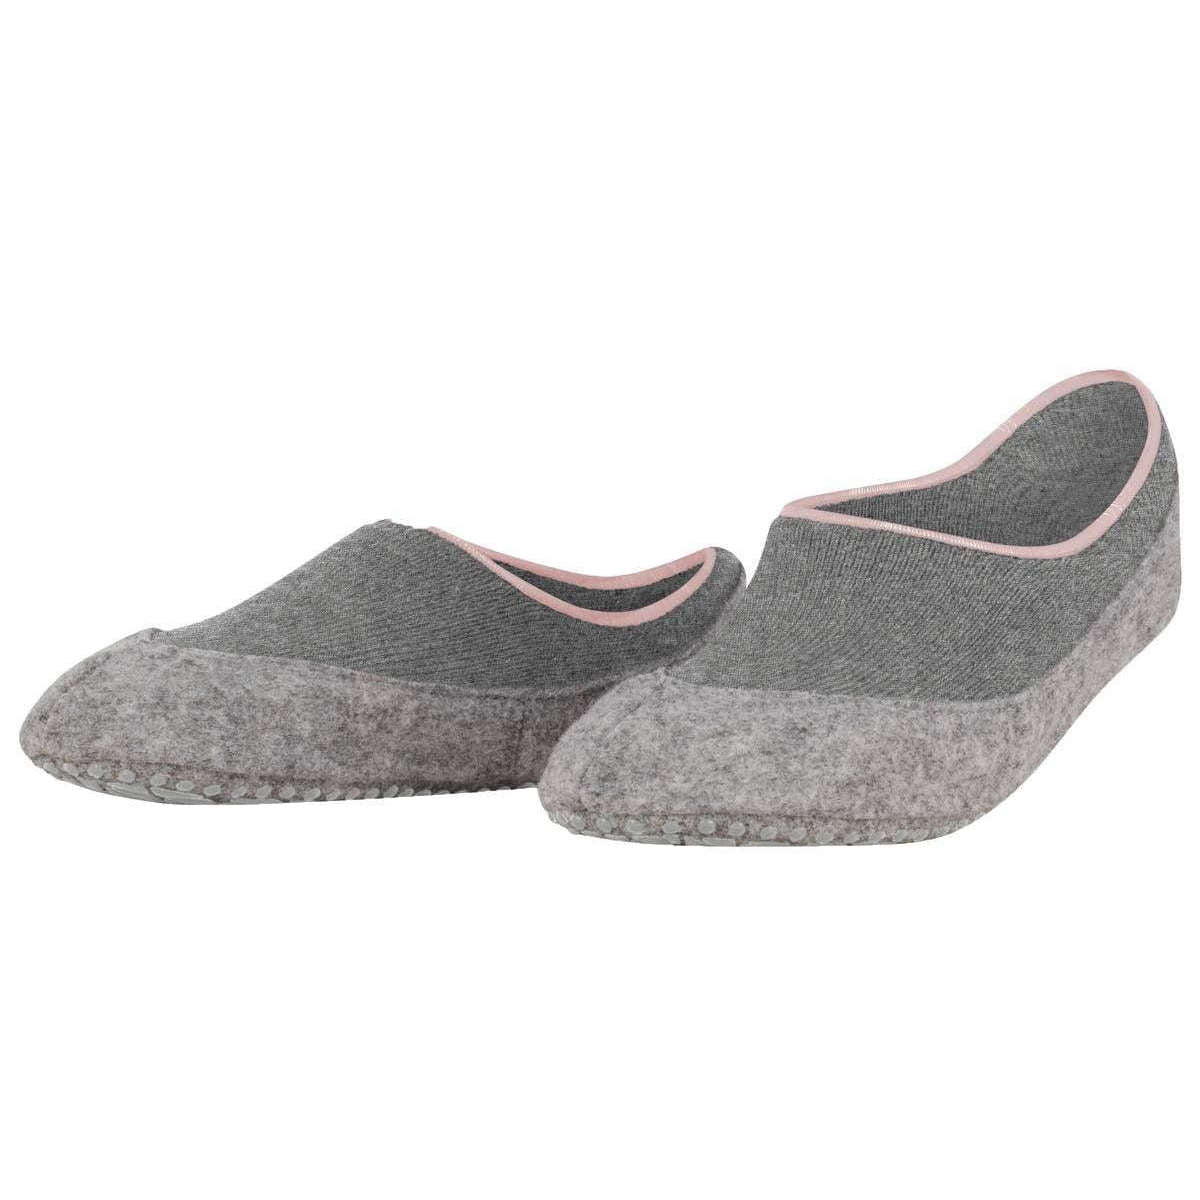 Falke Cosyshoe Invisible Slipper Socks - Light Grey - Small - 4-5 UK | 6.5-7.5 US | 37-38 EUR